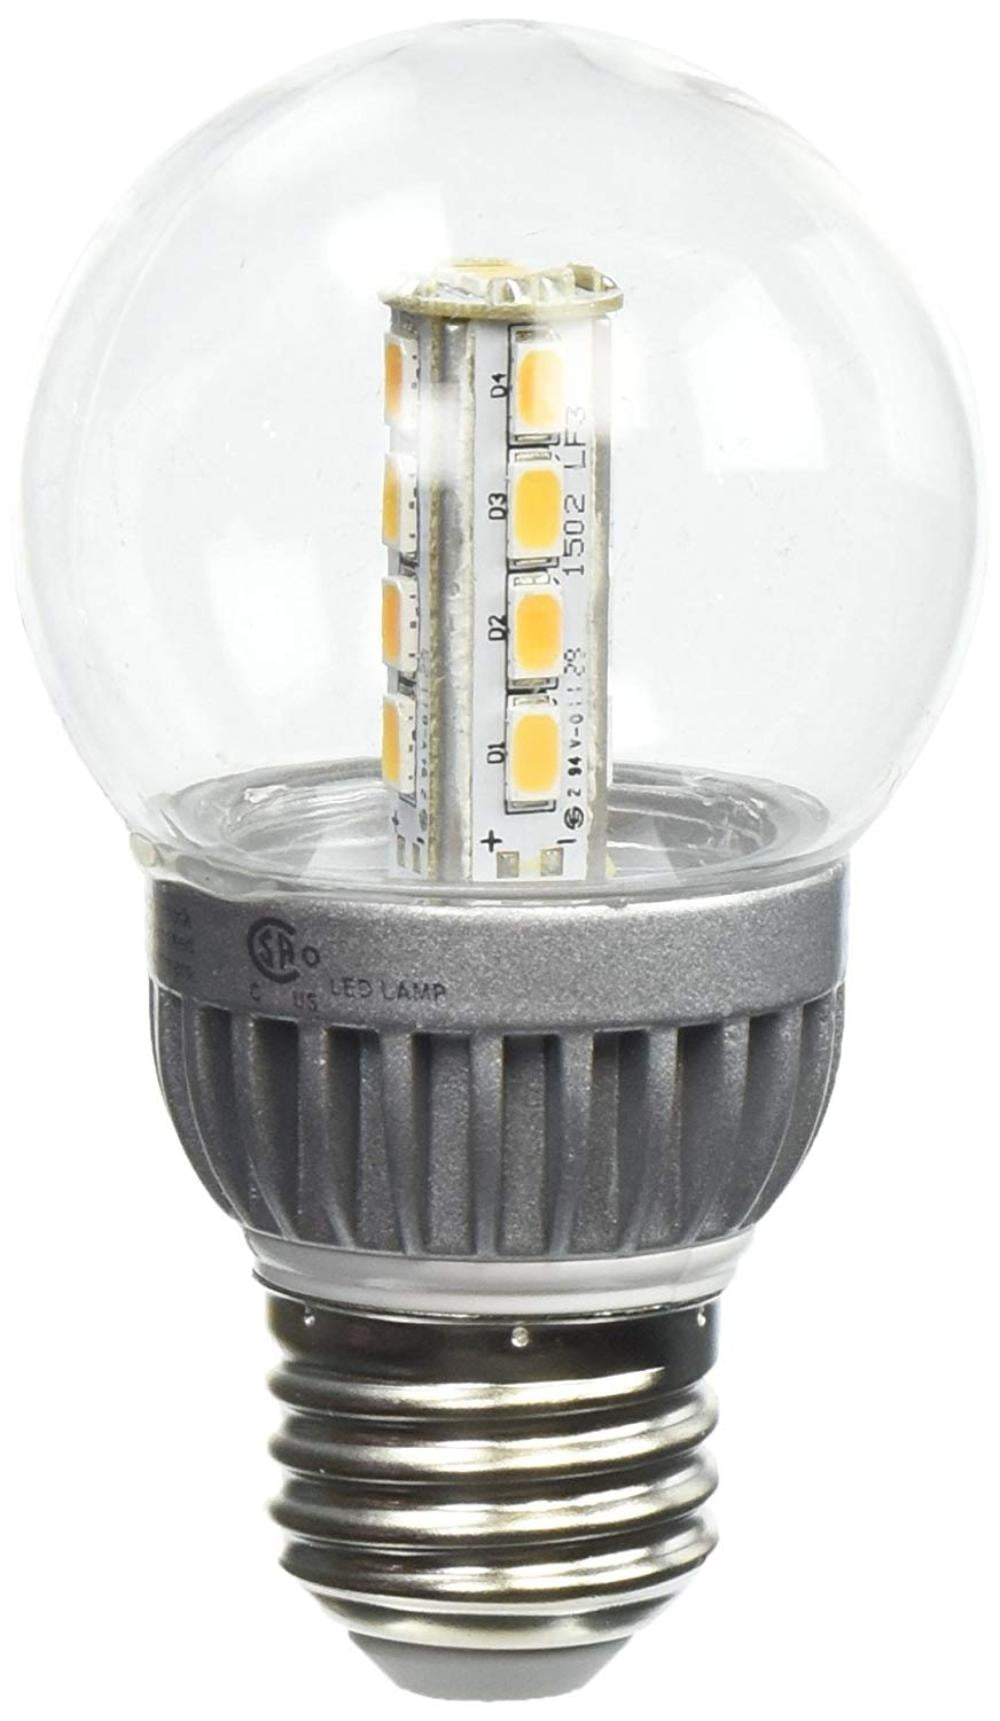 Lights of America 2426LED-LF3-24 2.5-Watts 135-Lumen Power LED Warm White Light Bulb for Pendants and Outdoor Lanterns